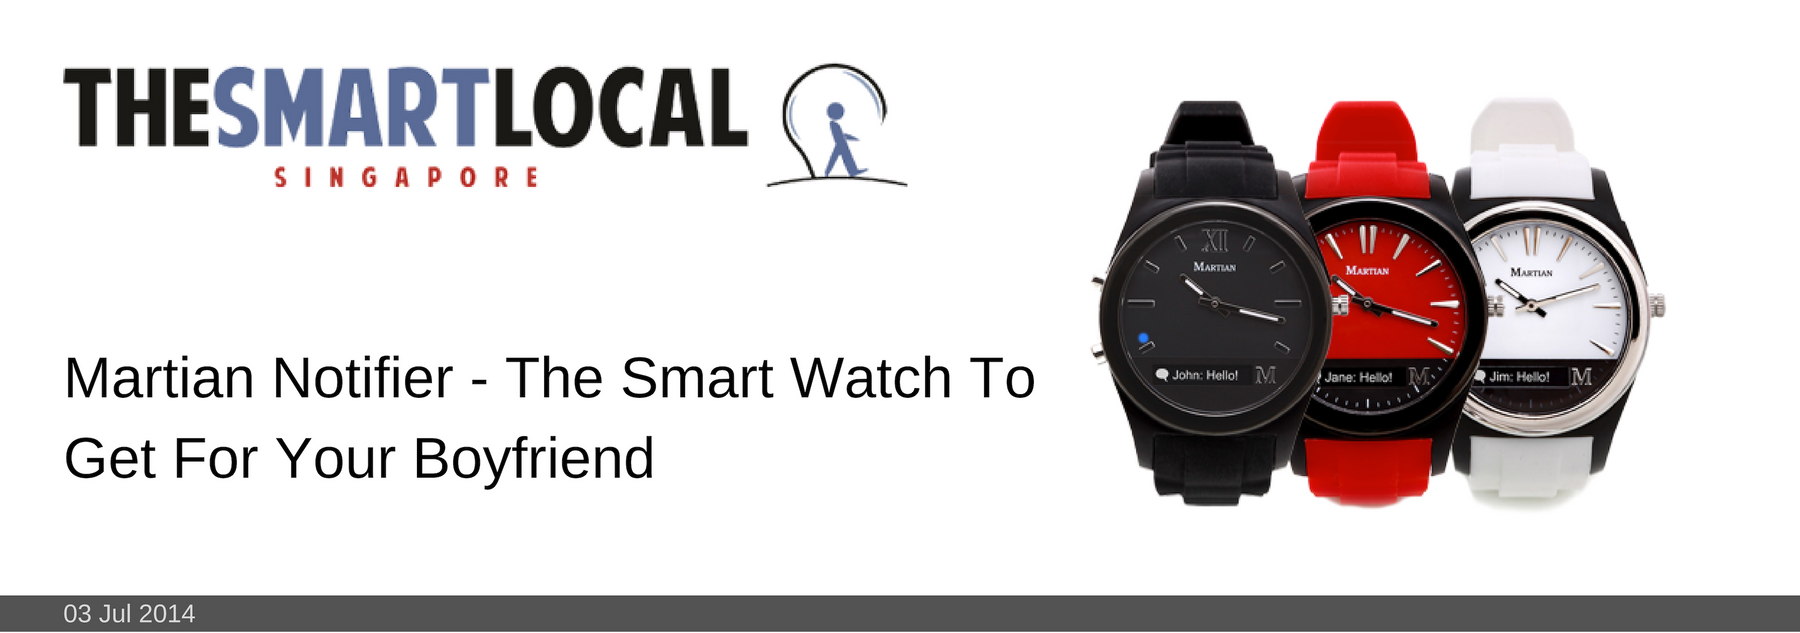 03 JUL 2014: Martian Notifier - The Smart Watch To Get For Your Boyfriend